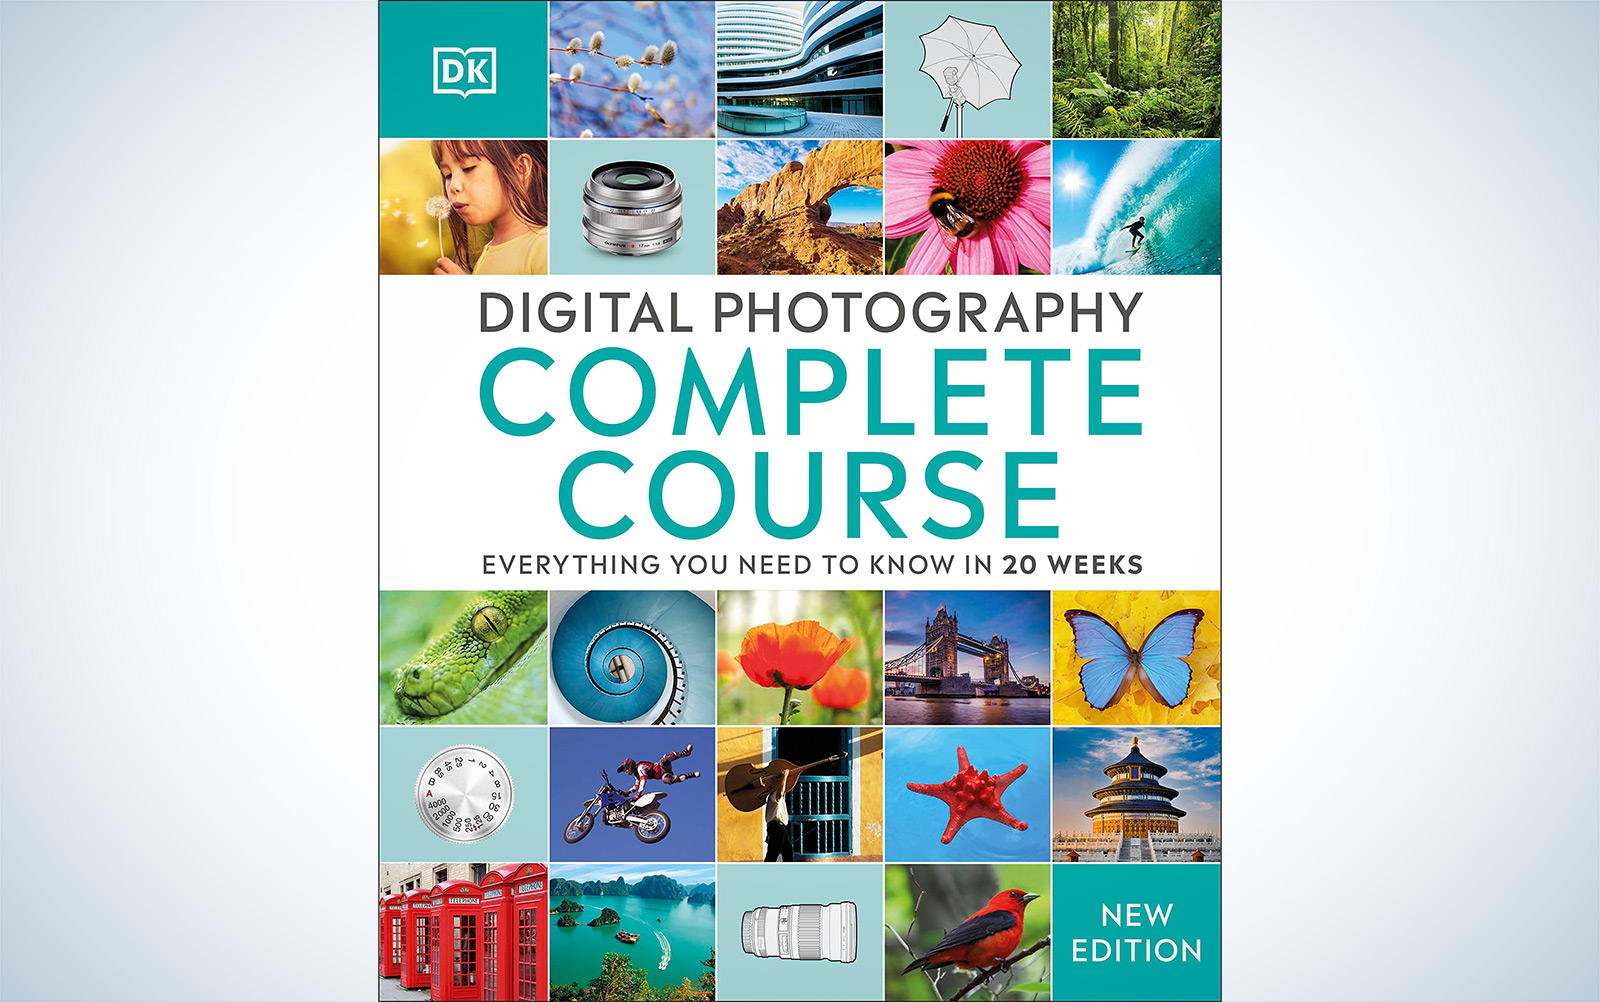 Best Photography Books Digitalphotography Complete Course 1 ?auto=webp&width=800&crop=16 10,offset X50